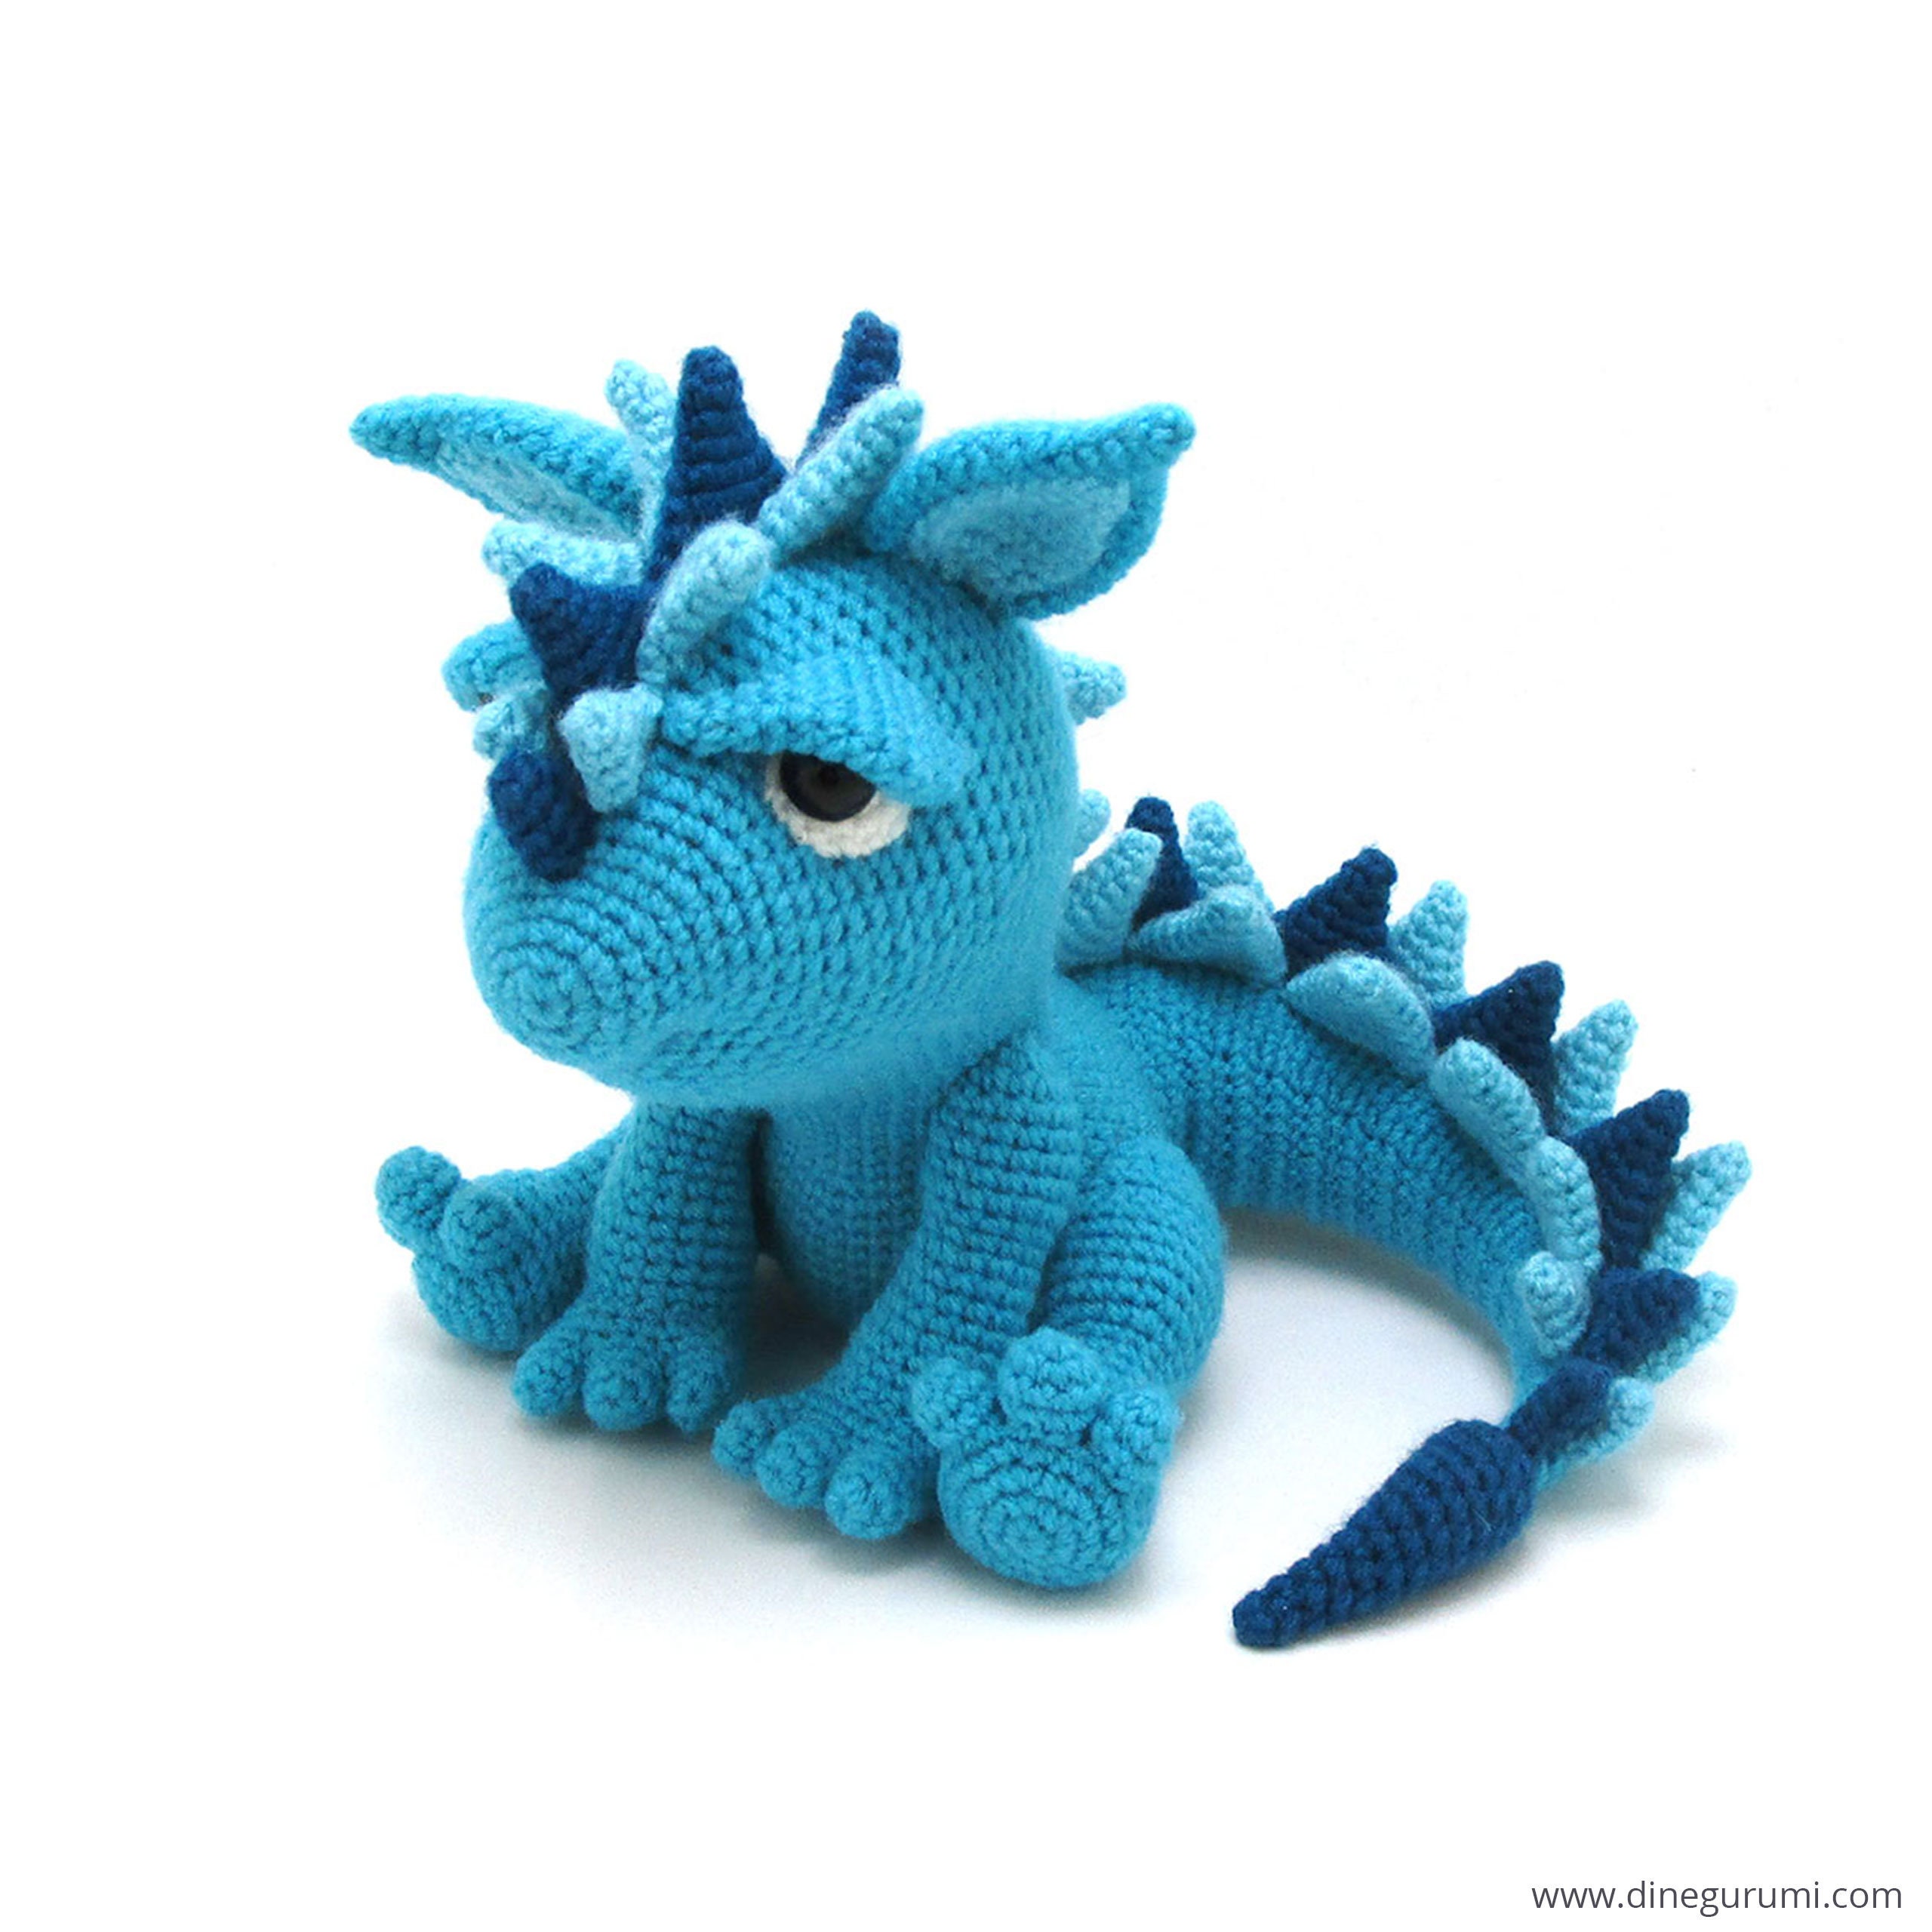  Spikey The Dinosaur Crochet Kit - Crochet Animals Kit